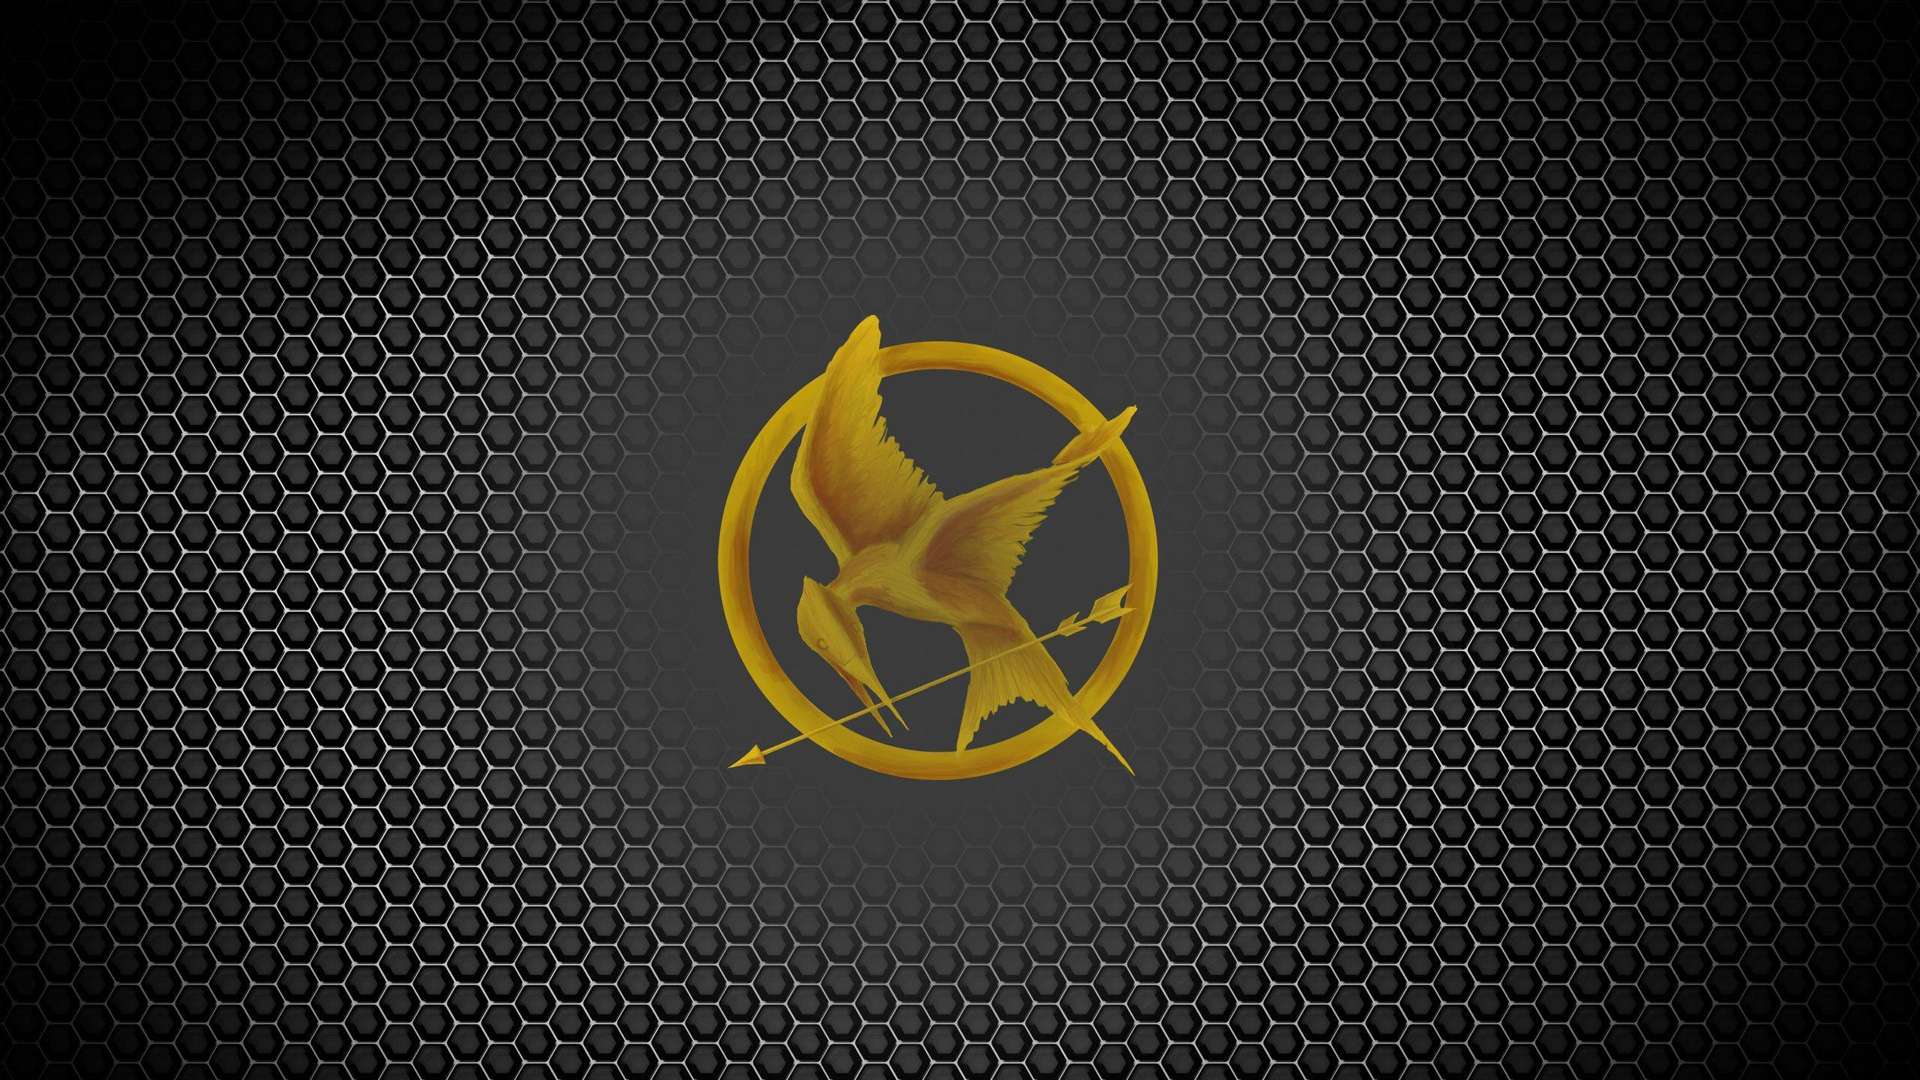 The Hunger Games Logo HD Wallpaper FullHDWpp   Full HD Wallpapers 1920x1080